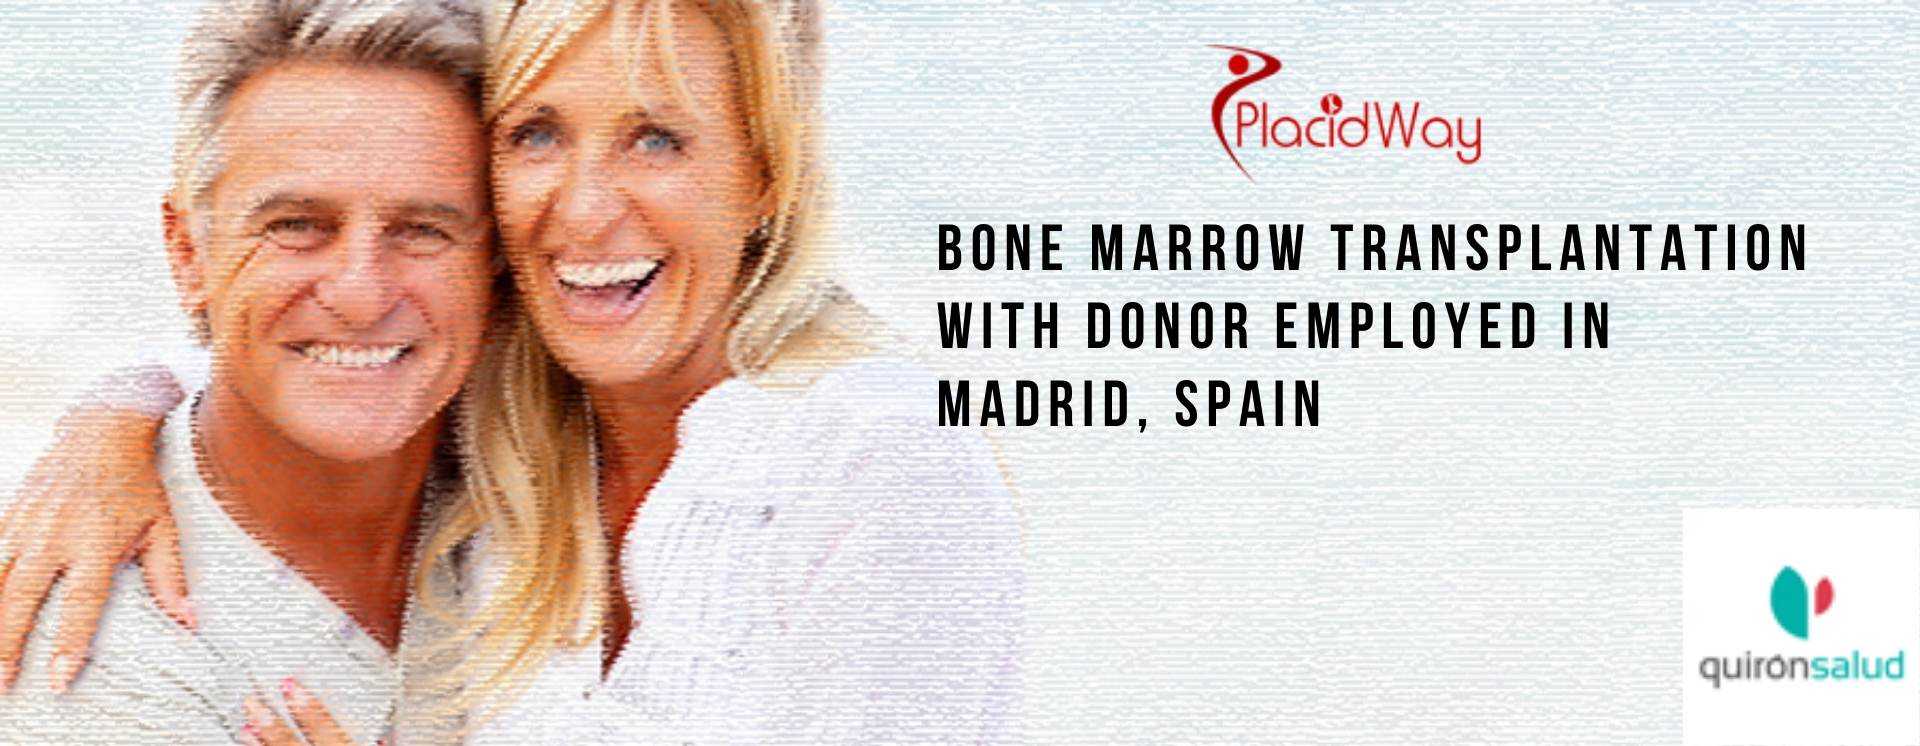 Bone Marrow Transplantation with Donor Employed in Madrid, Spain